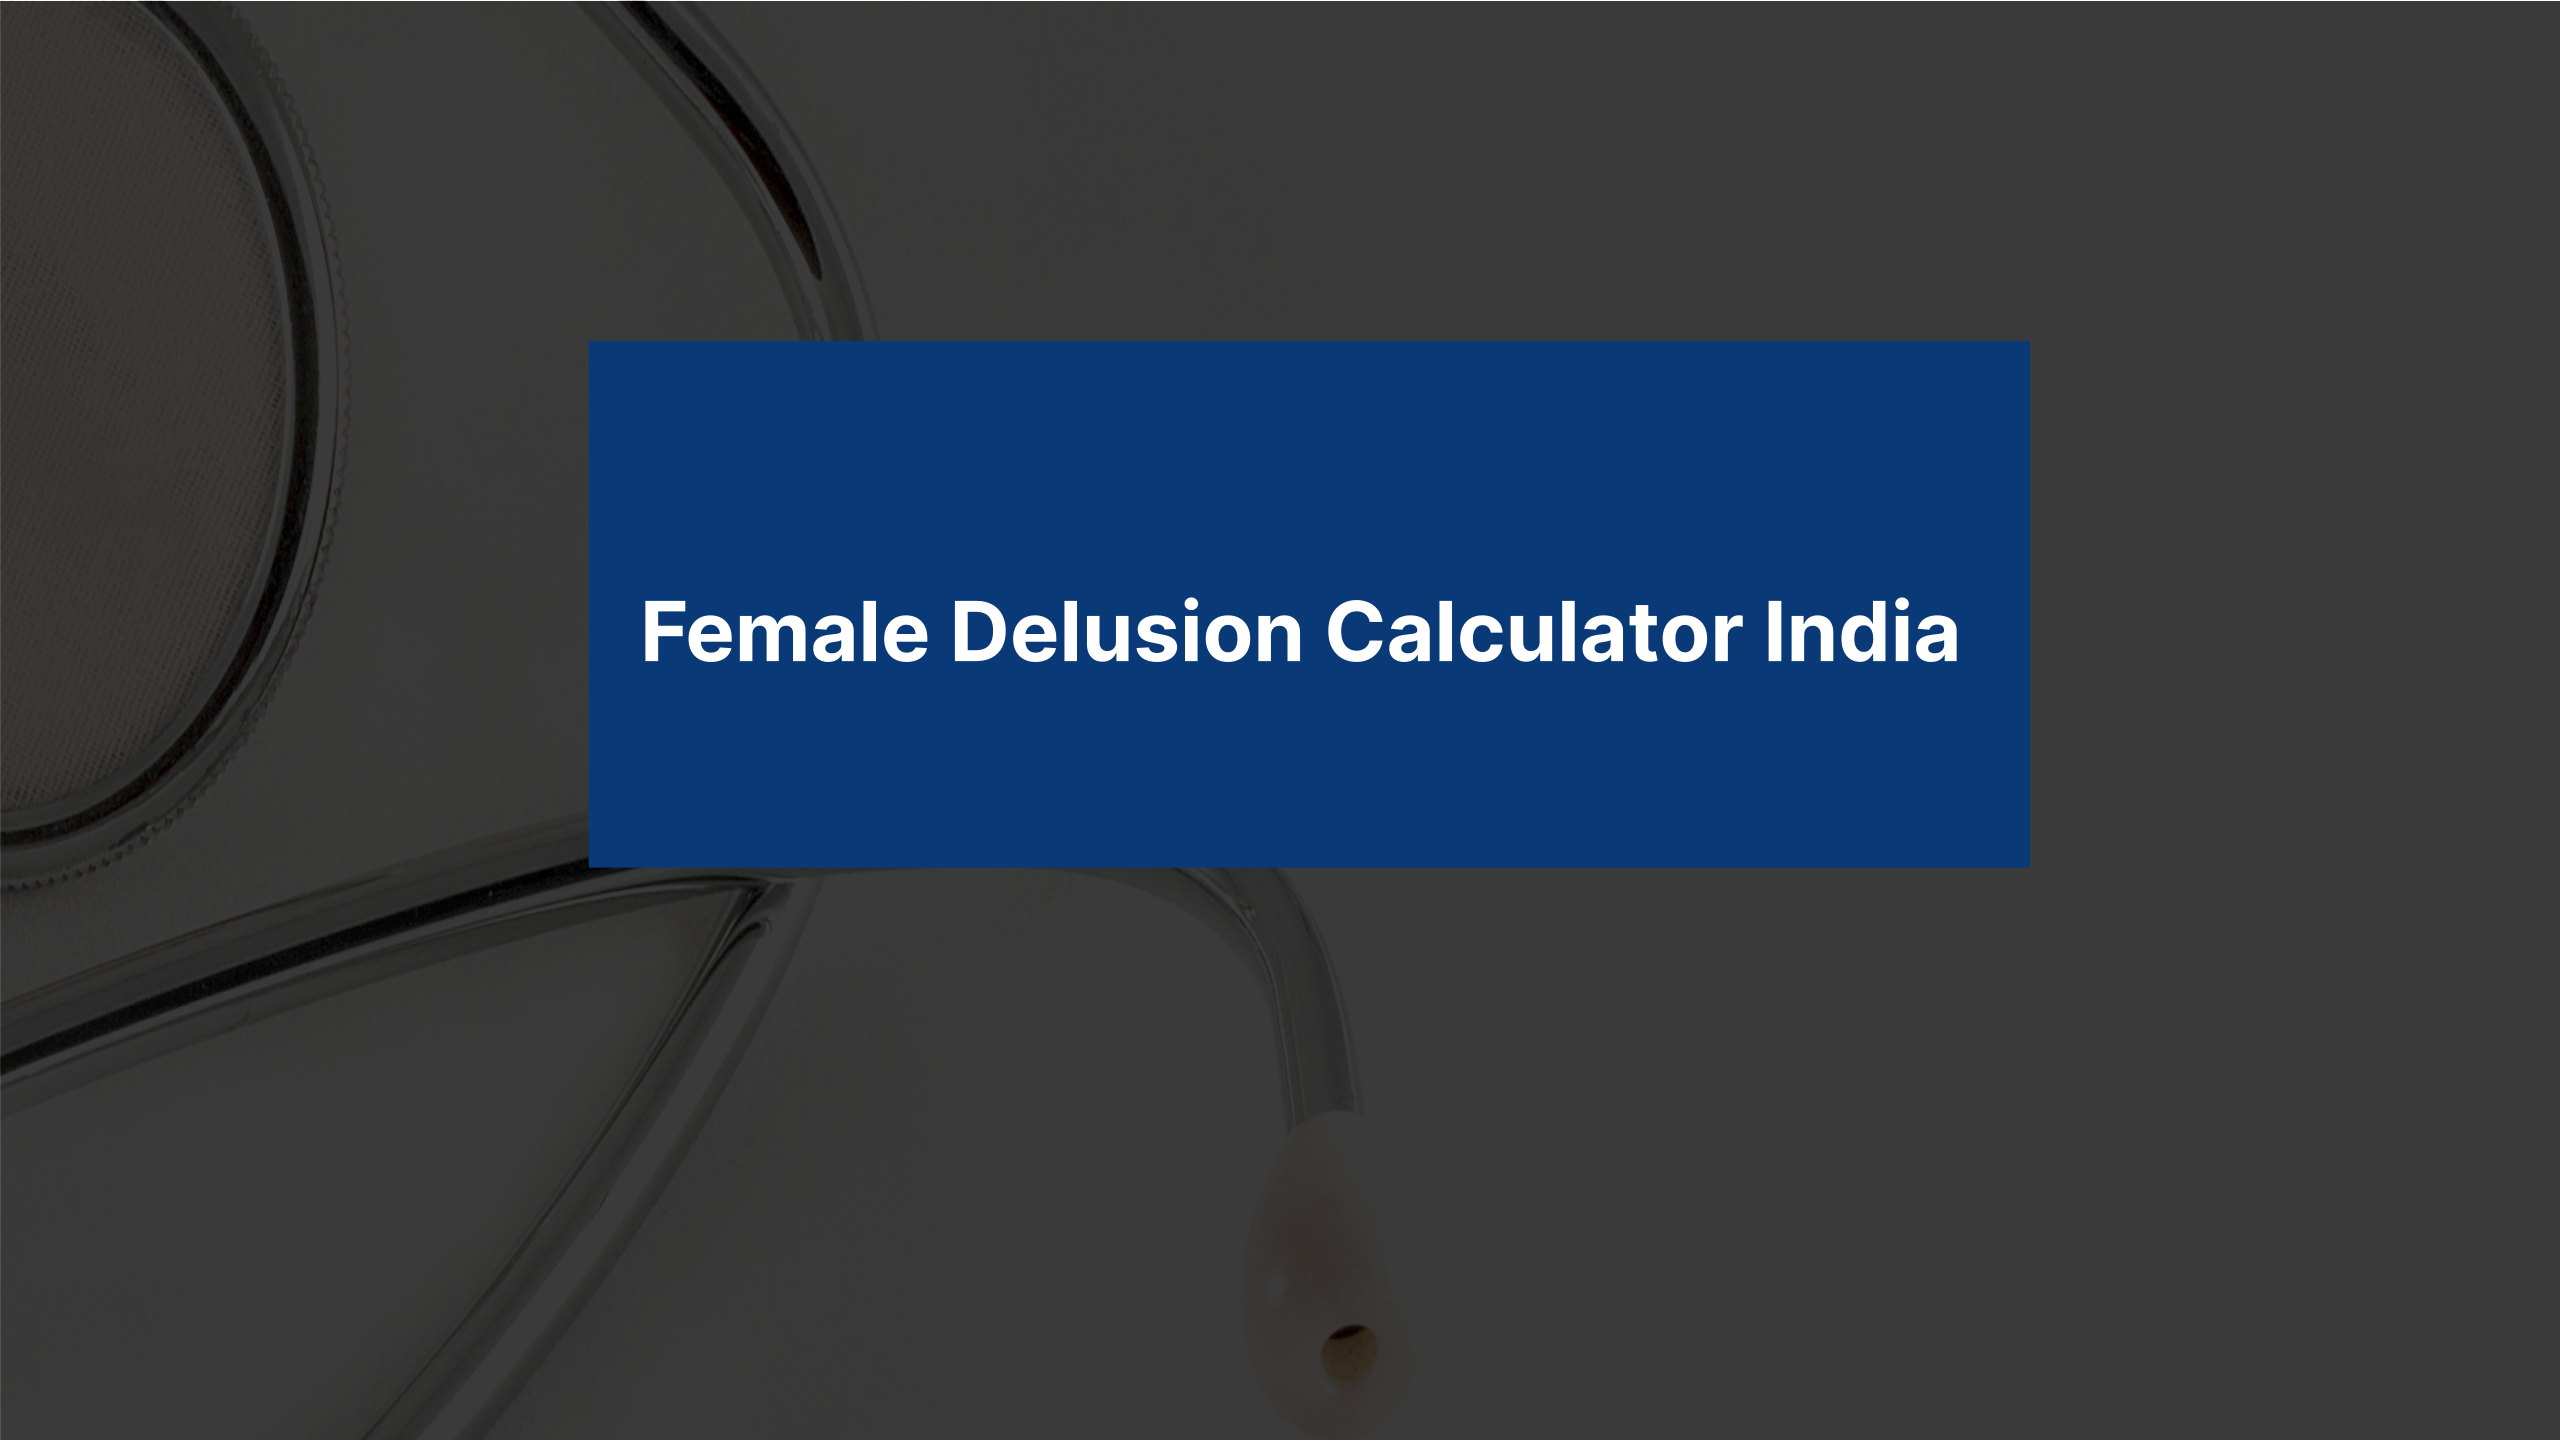 Understanding the Female Delusion Calculator India